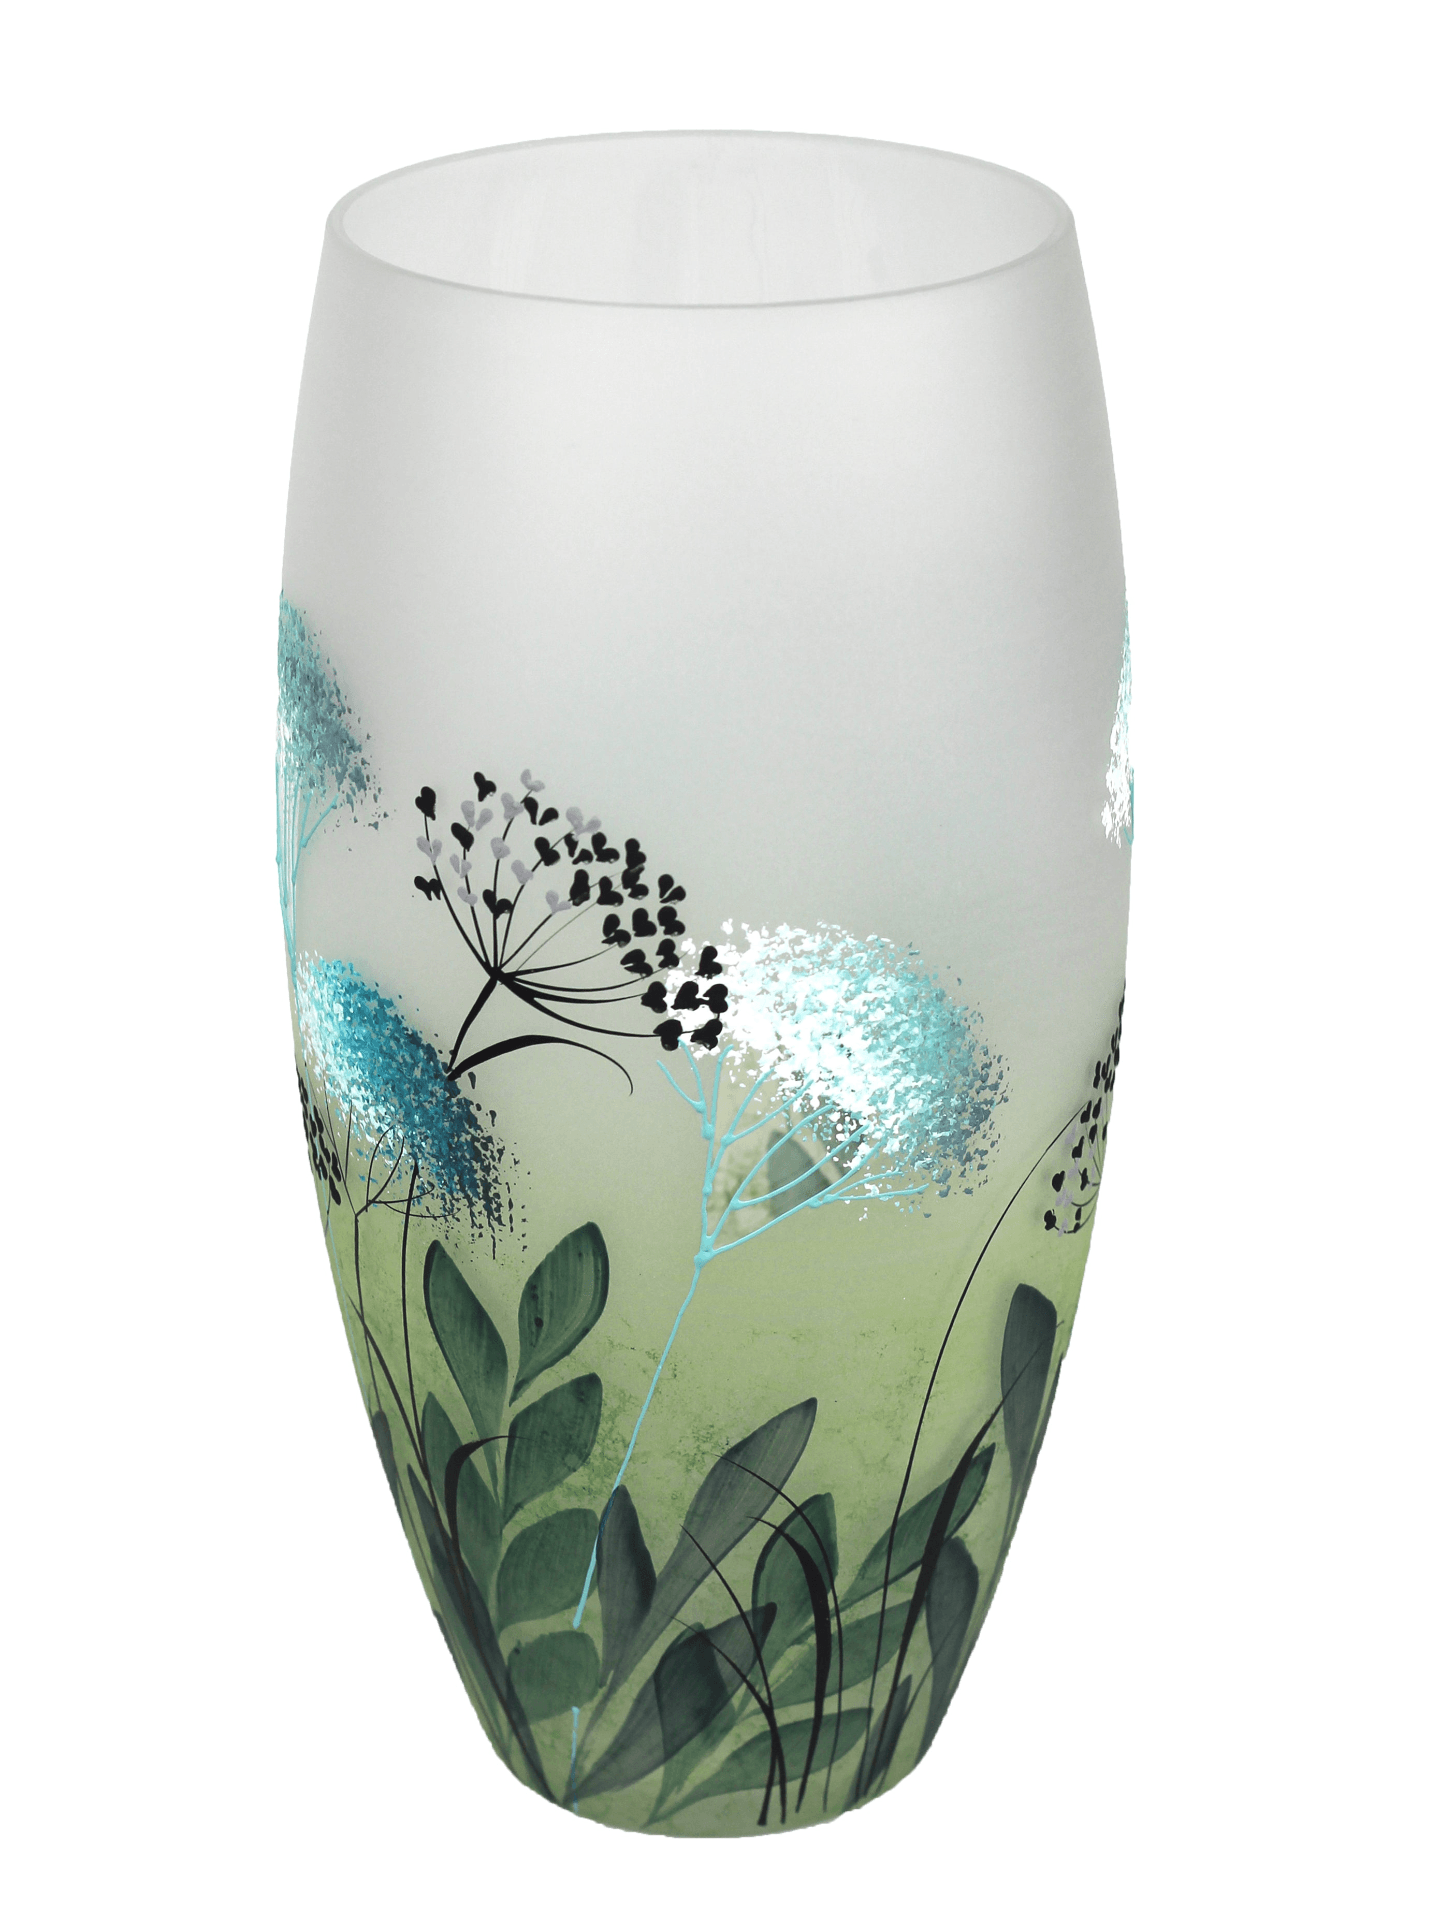 table green art decorative glass vase 7518/300/sh319  